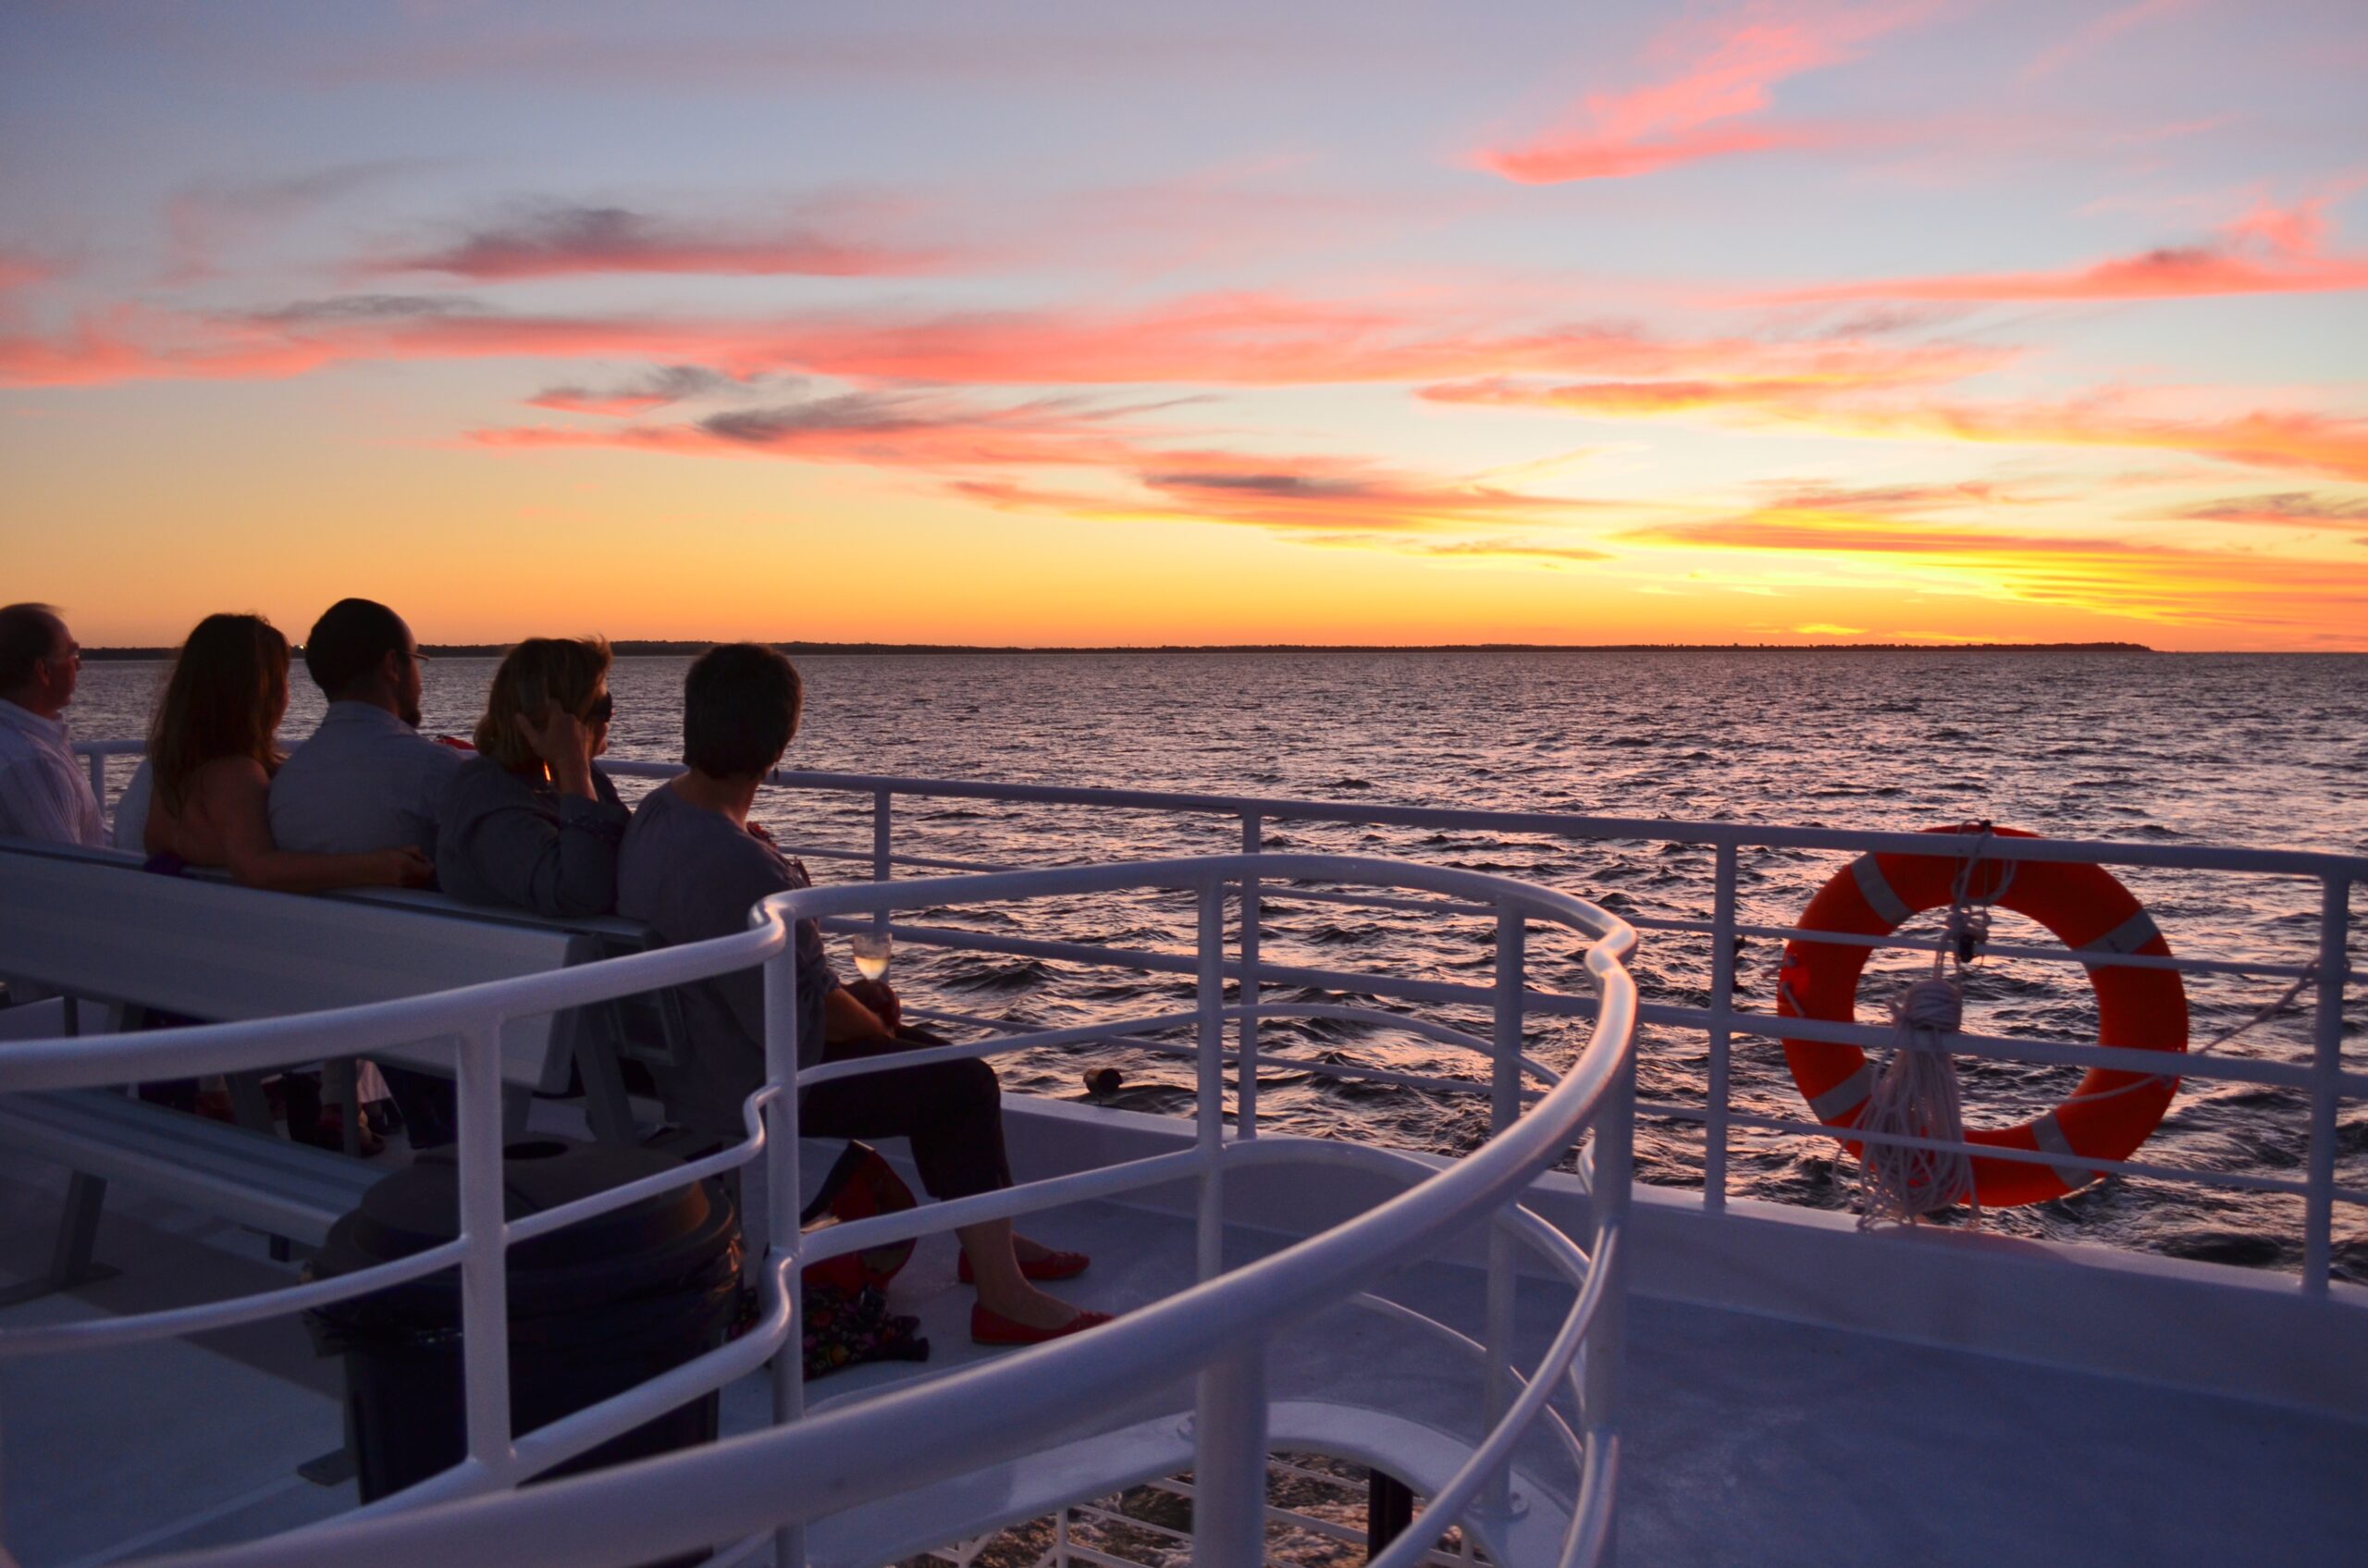 sunset cruise queensland